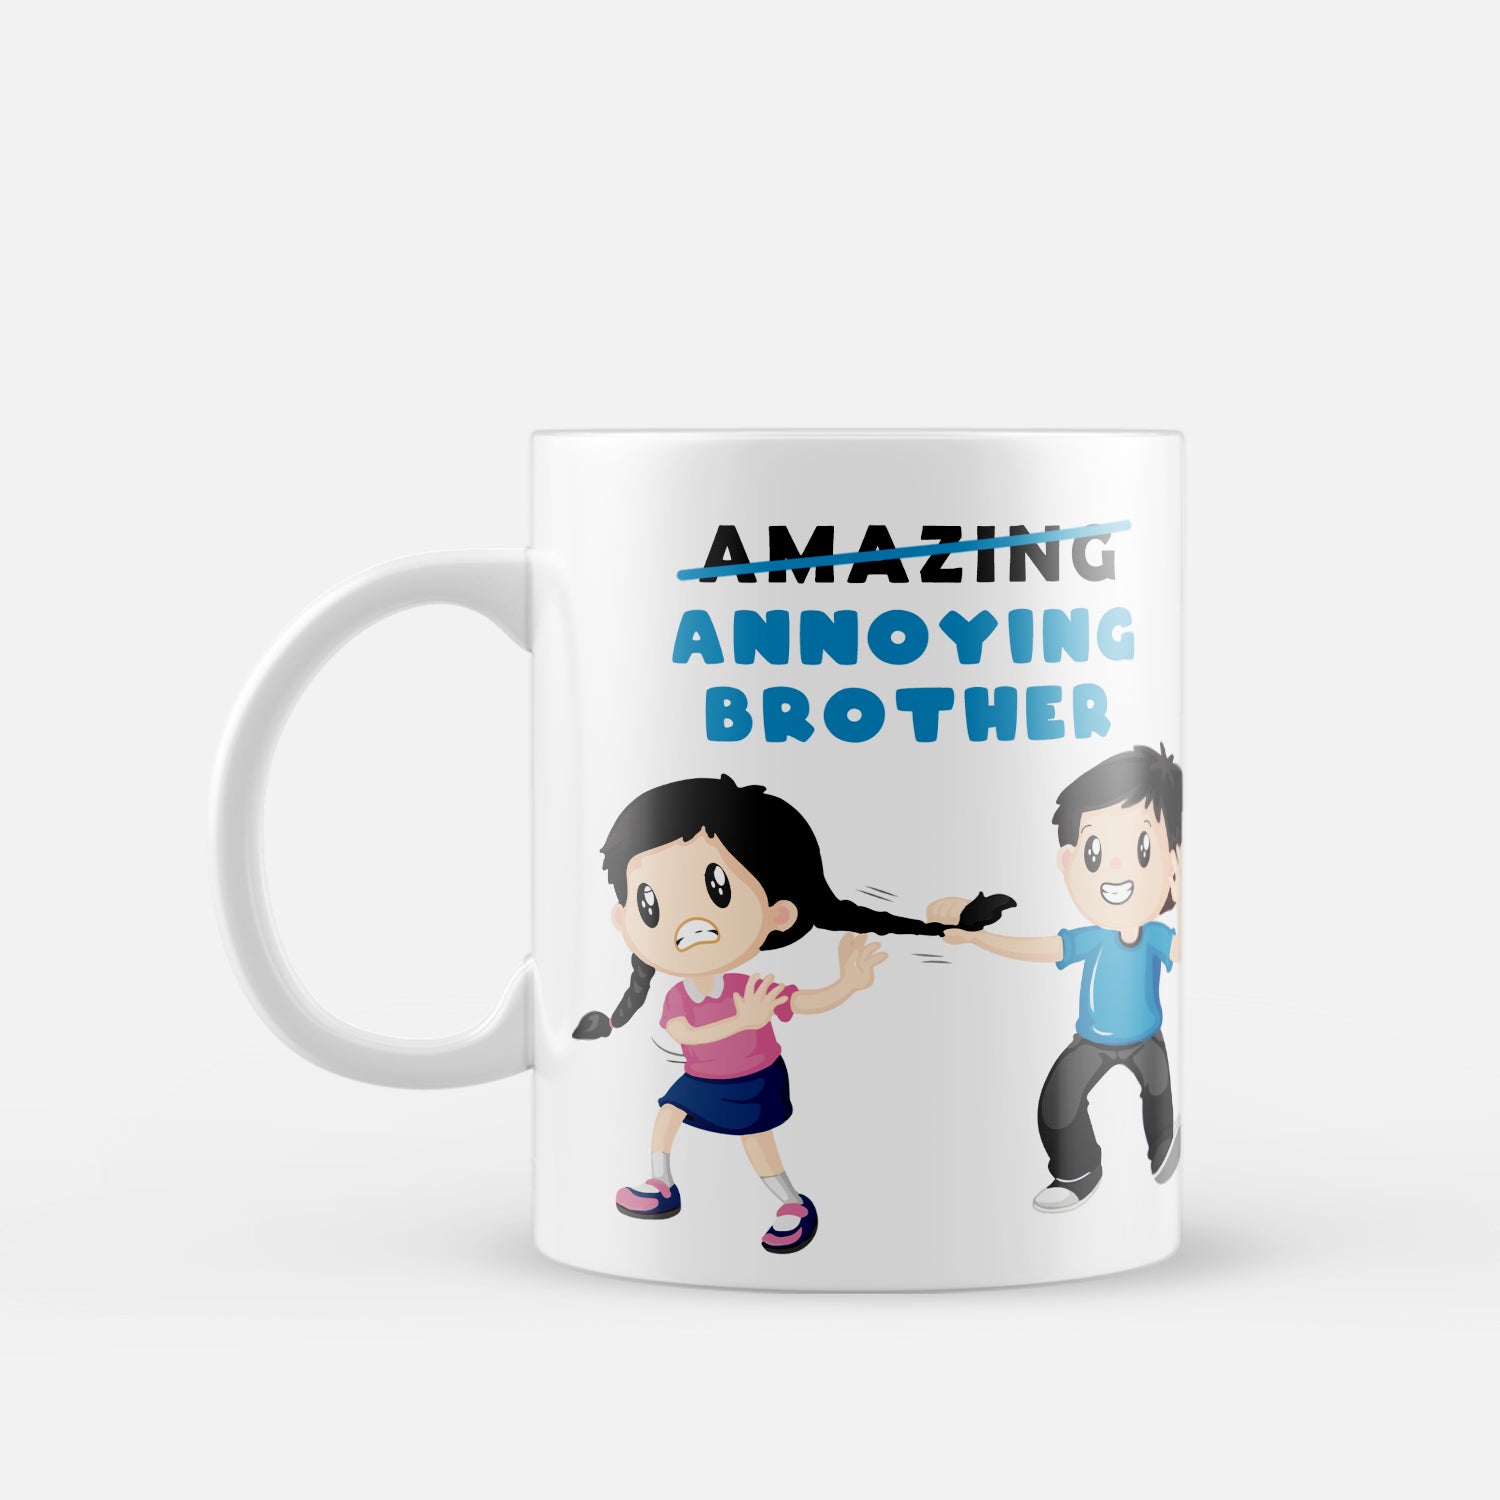 "Amazing Brother" Rakhi Theme Ceramic Coffee/Tea Mug 2